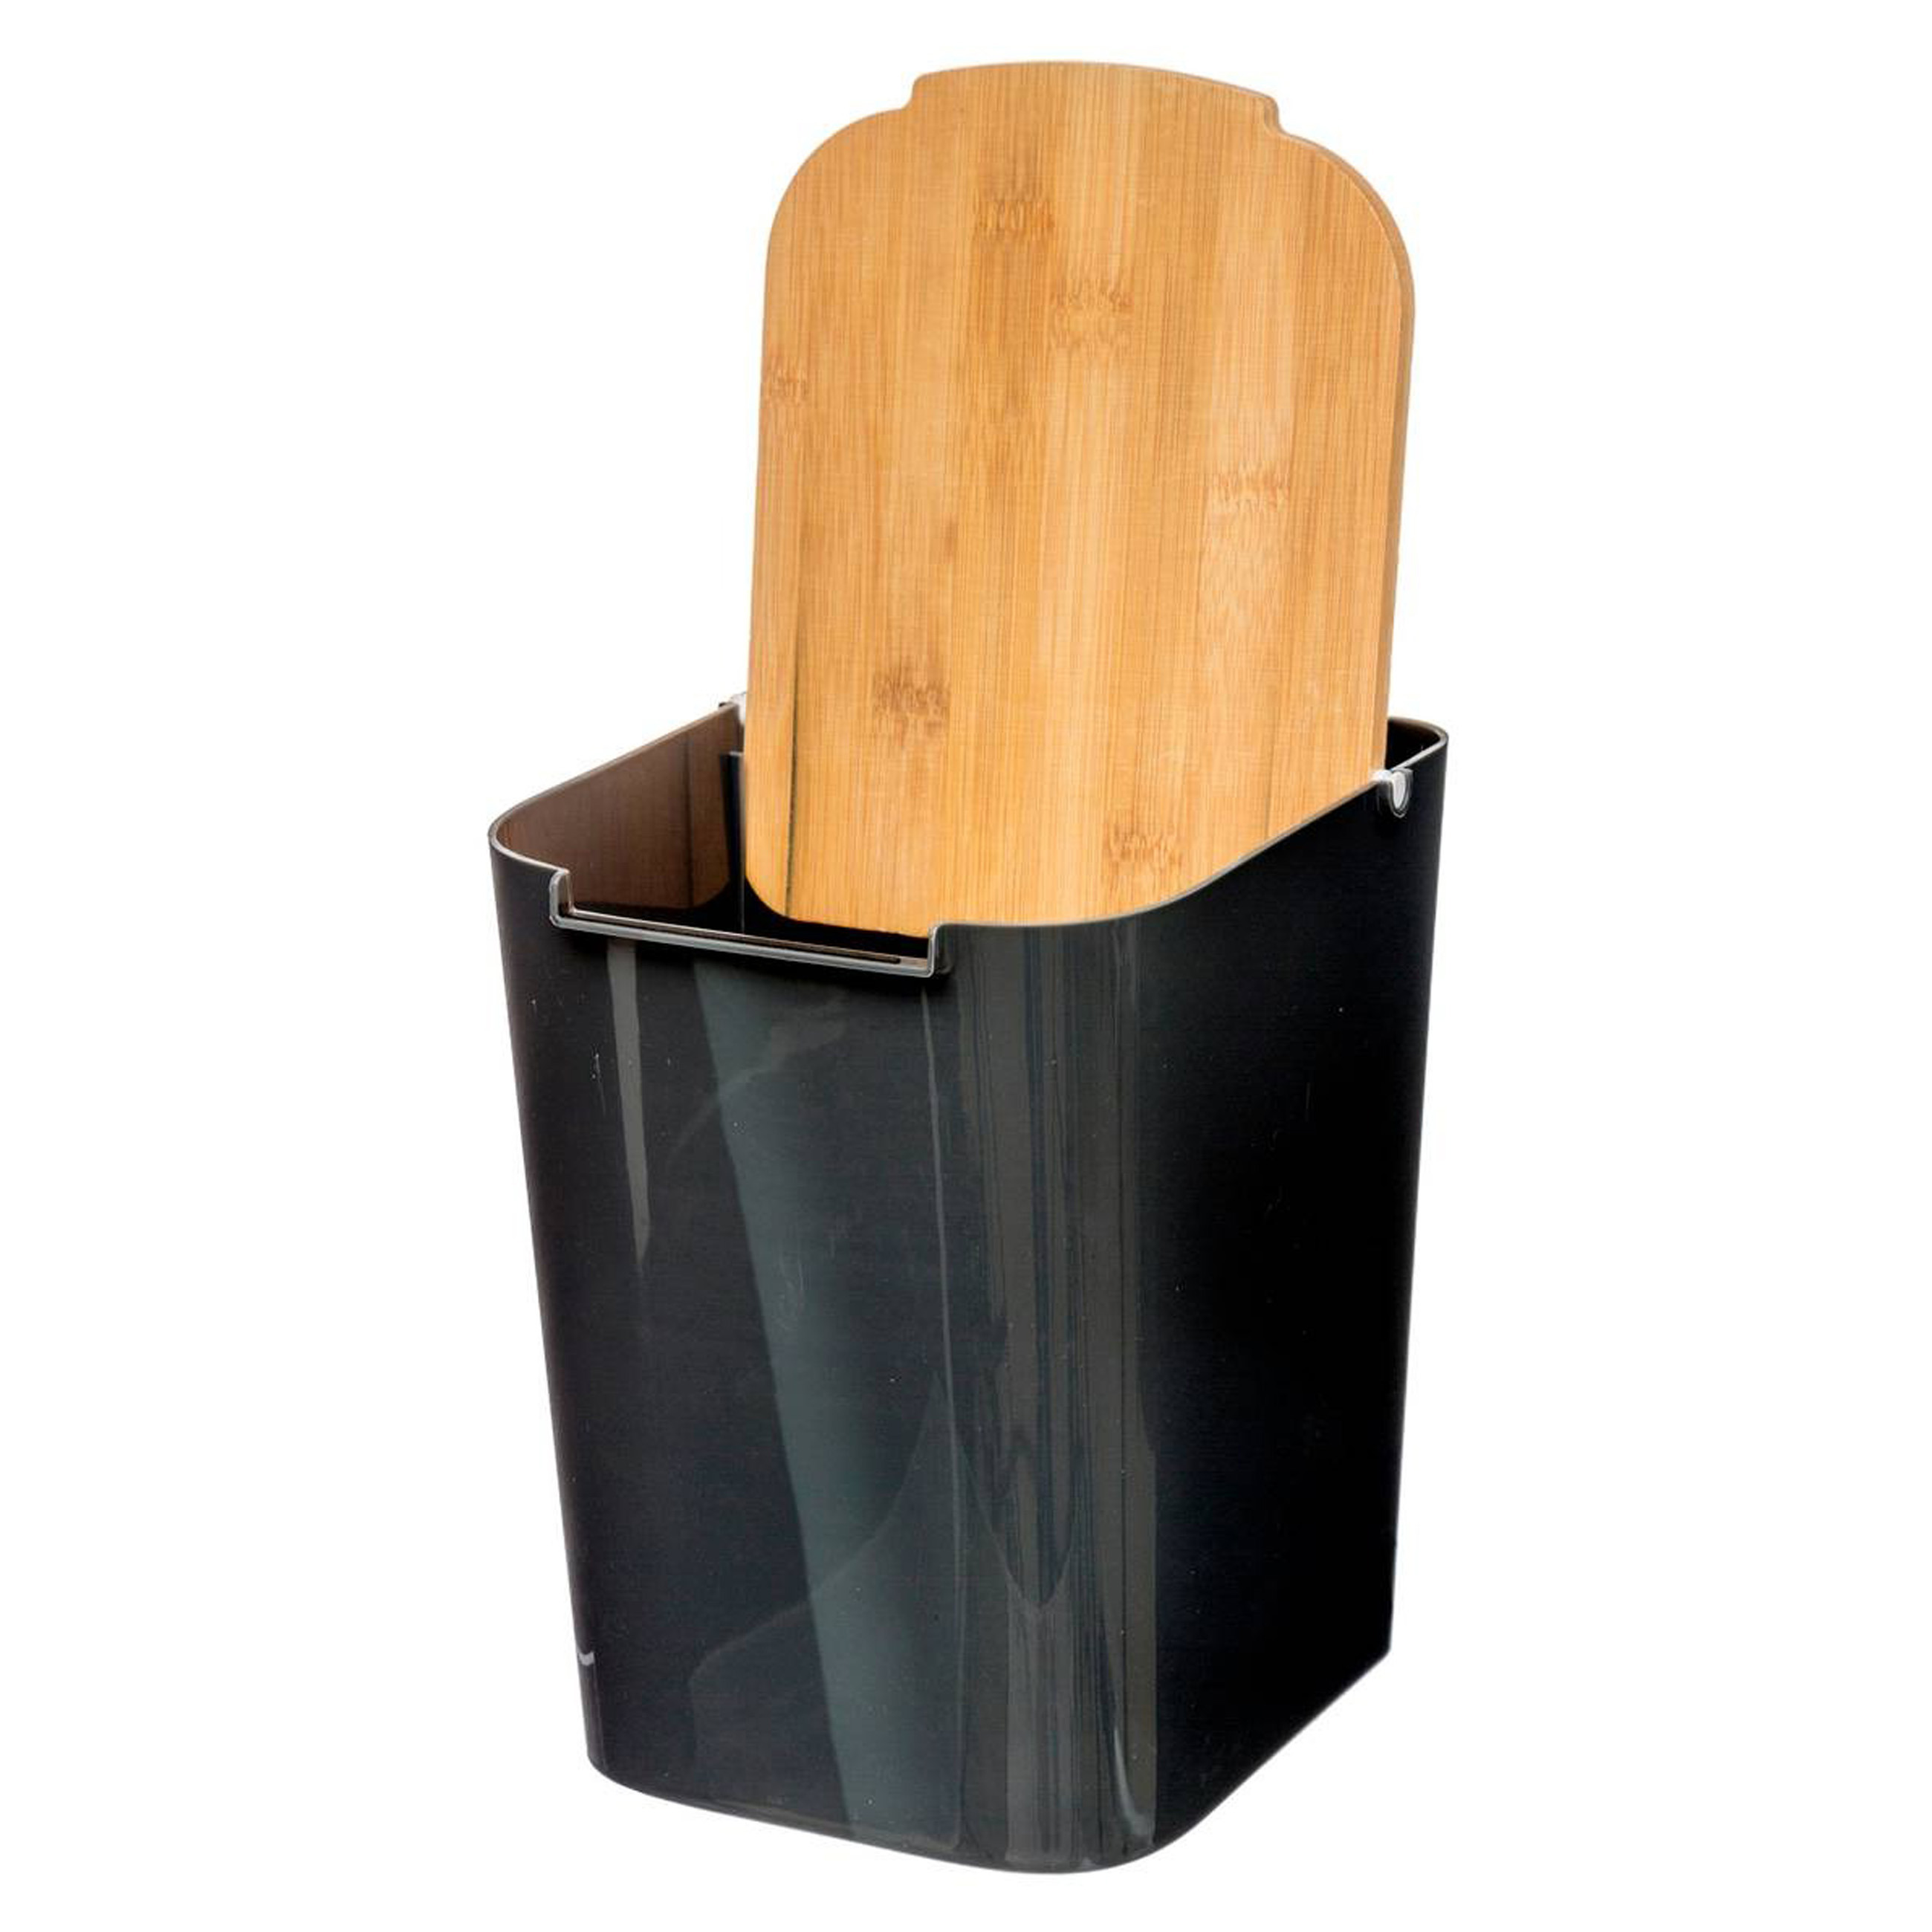 5Five prullenbak-vuilnisbak 5 liter bamboe zwart-lichtbruin 24 x 19 cm badkamer afvalbak